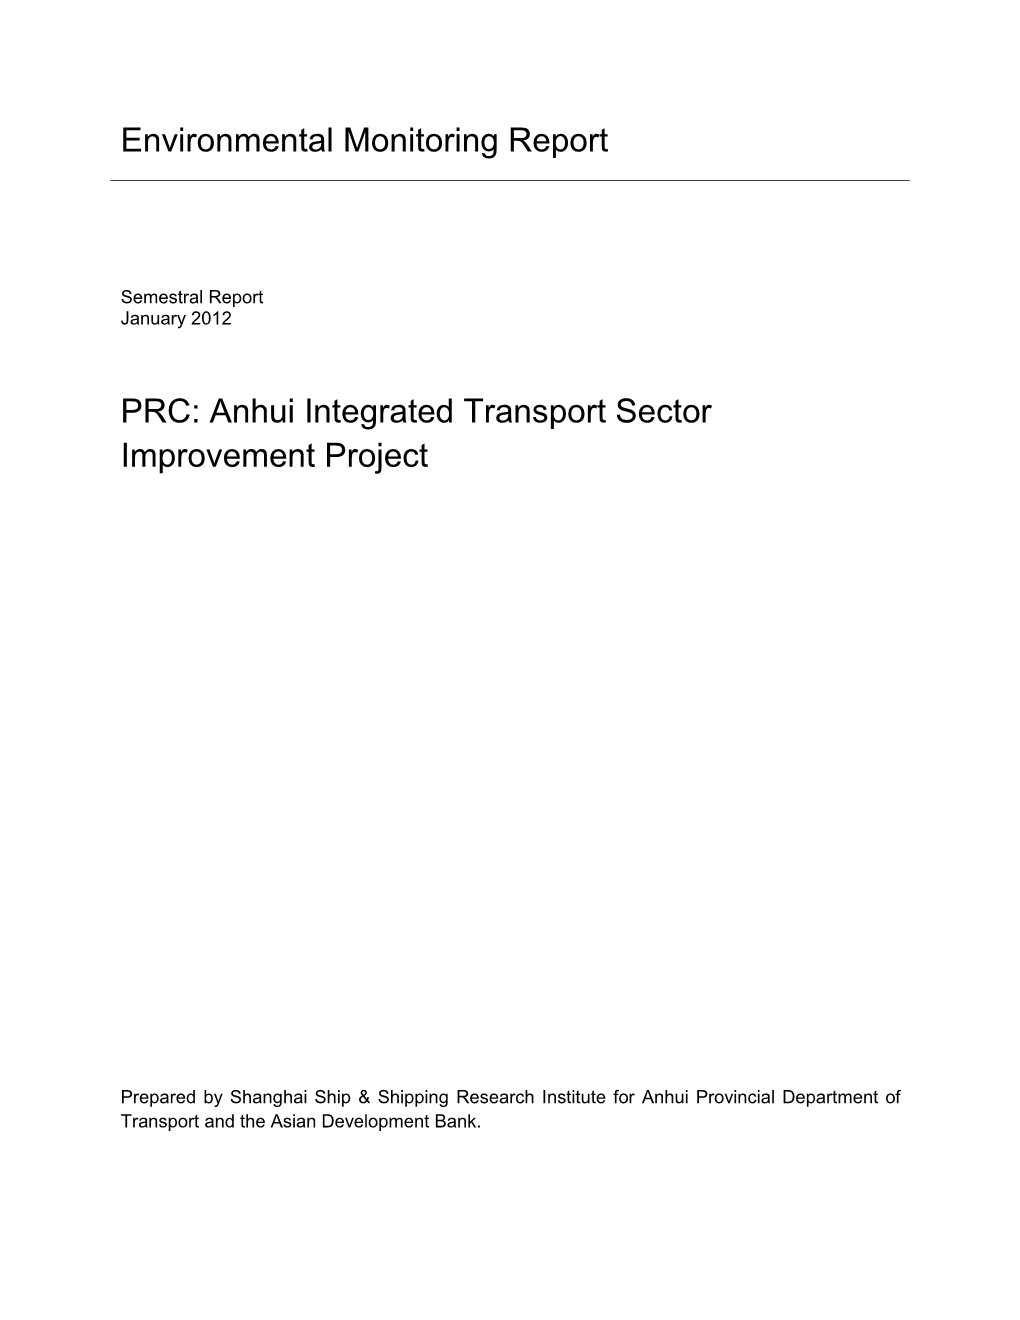 EMR: Anhui Integrated Transport Sector Improvement Project (June